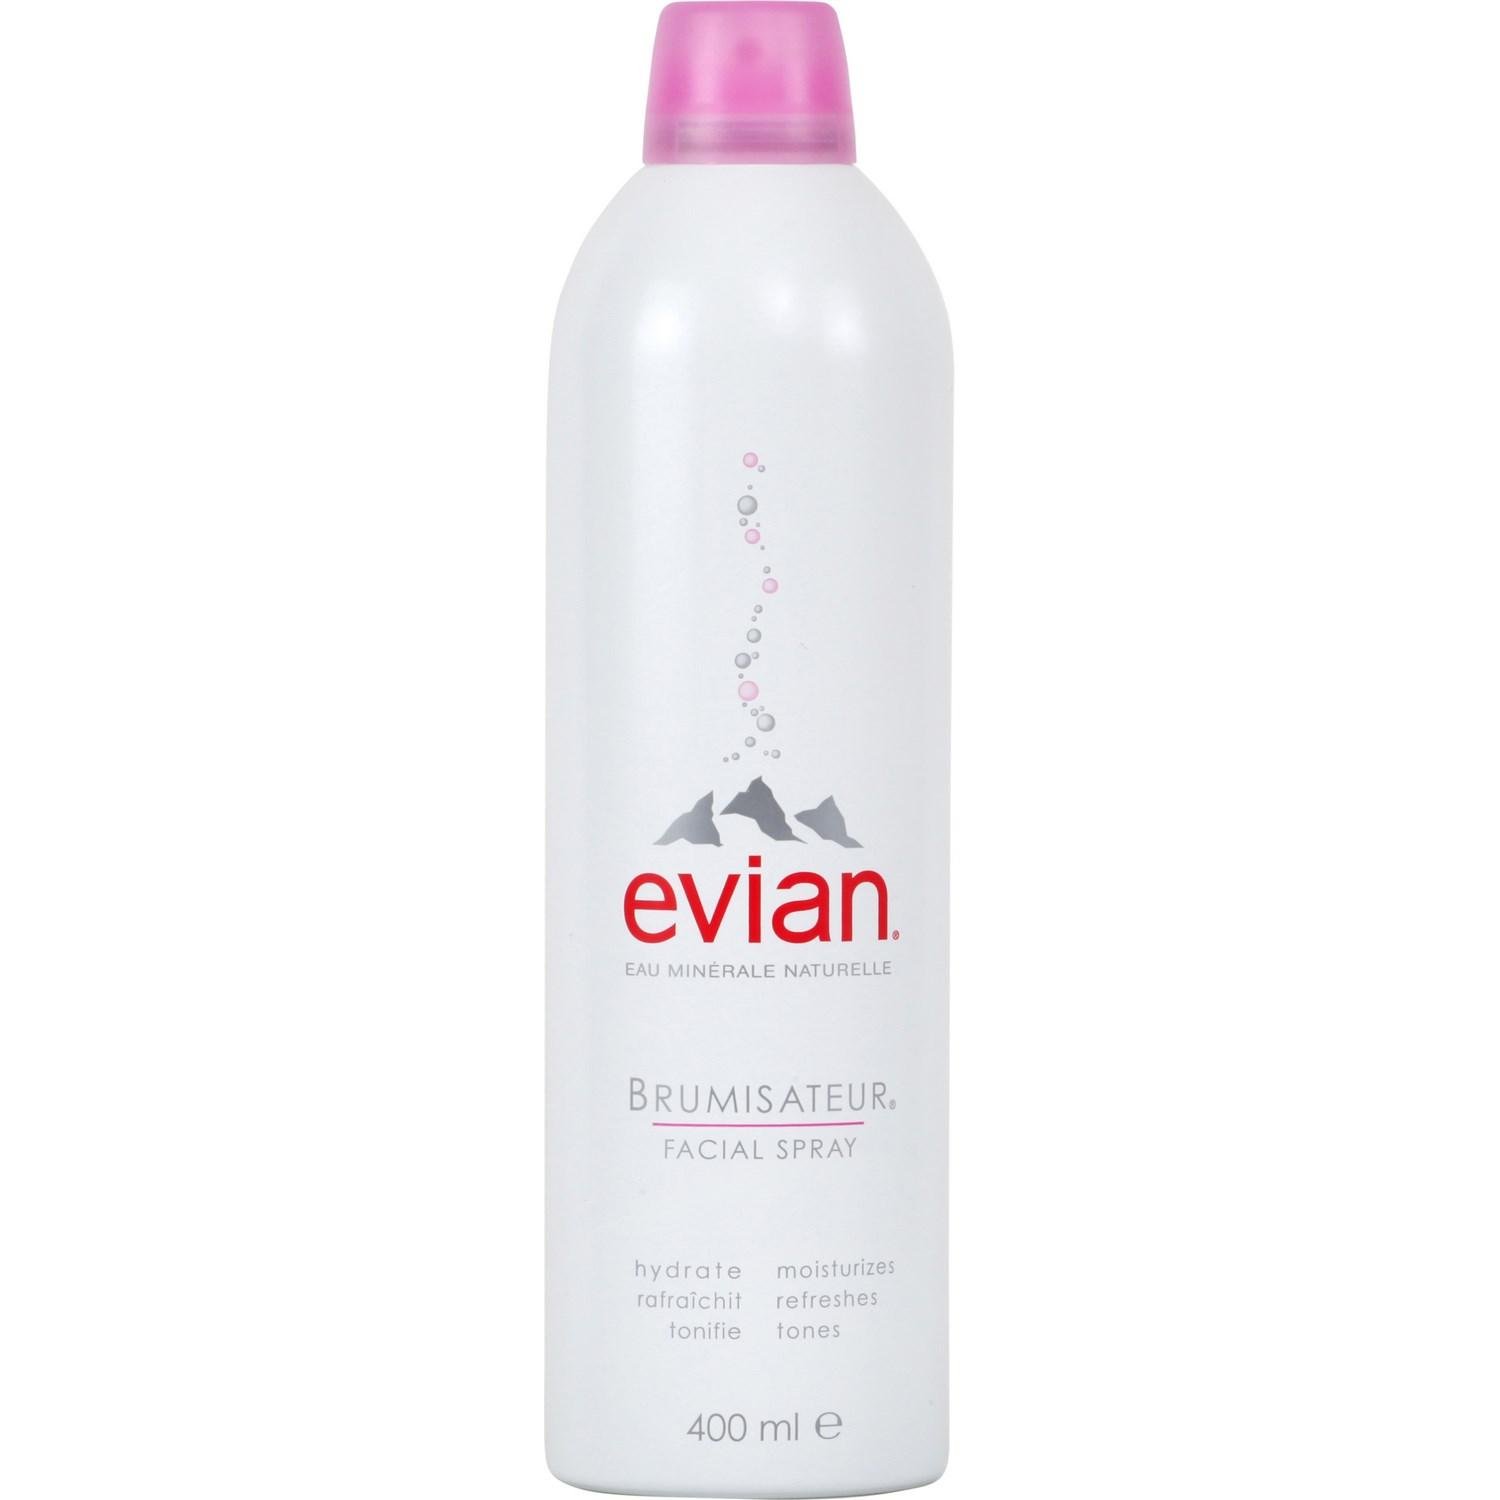 Evian spray, brumisateur